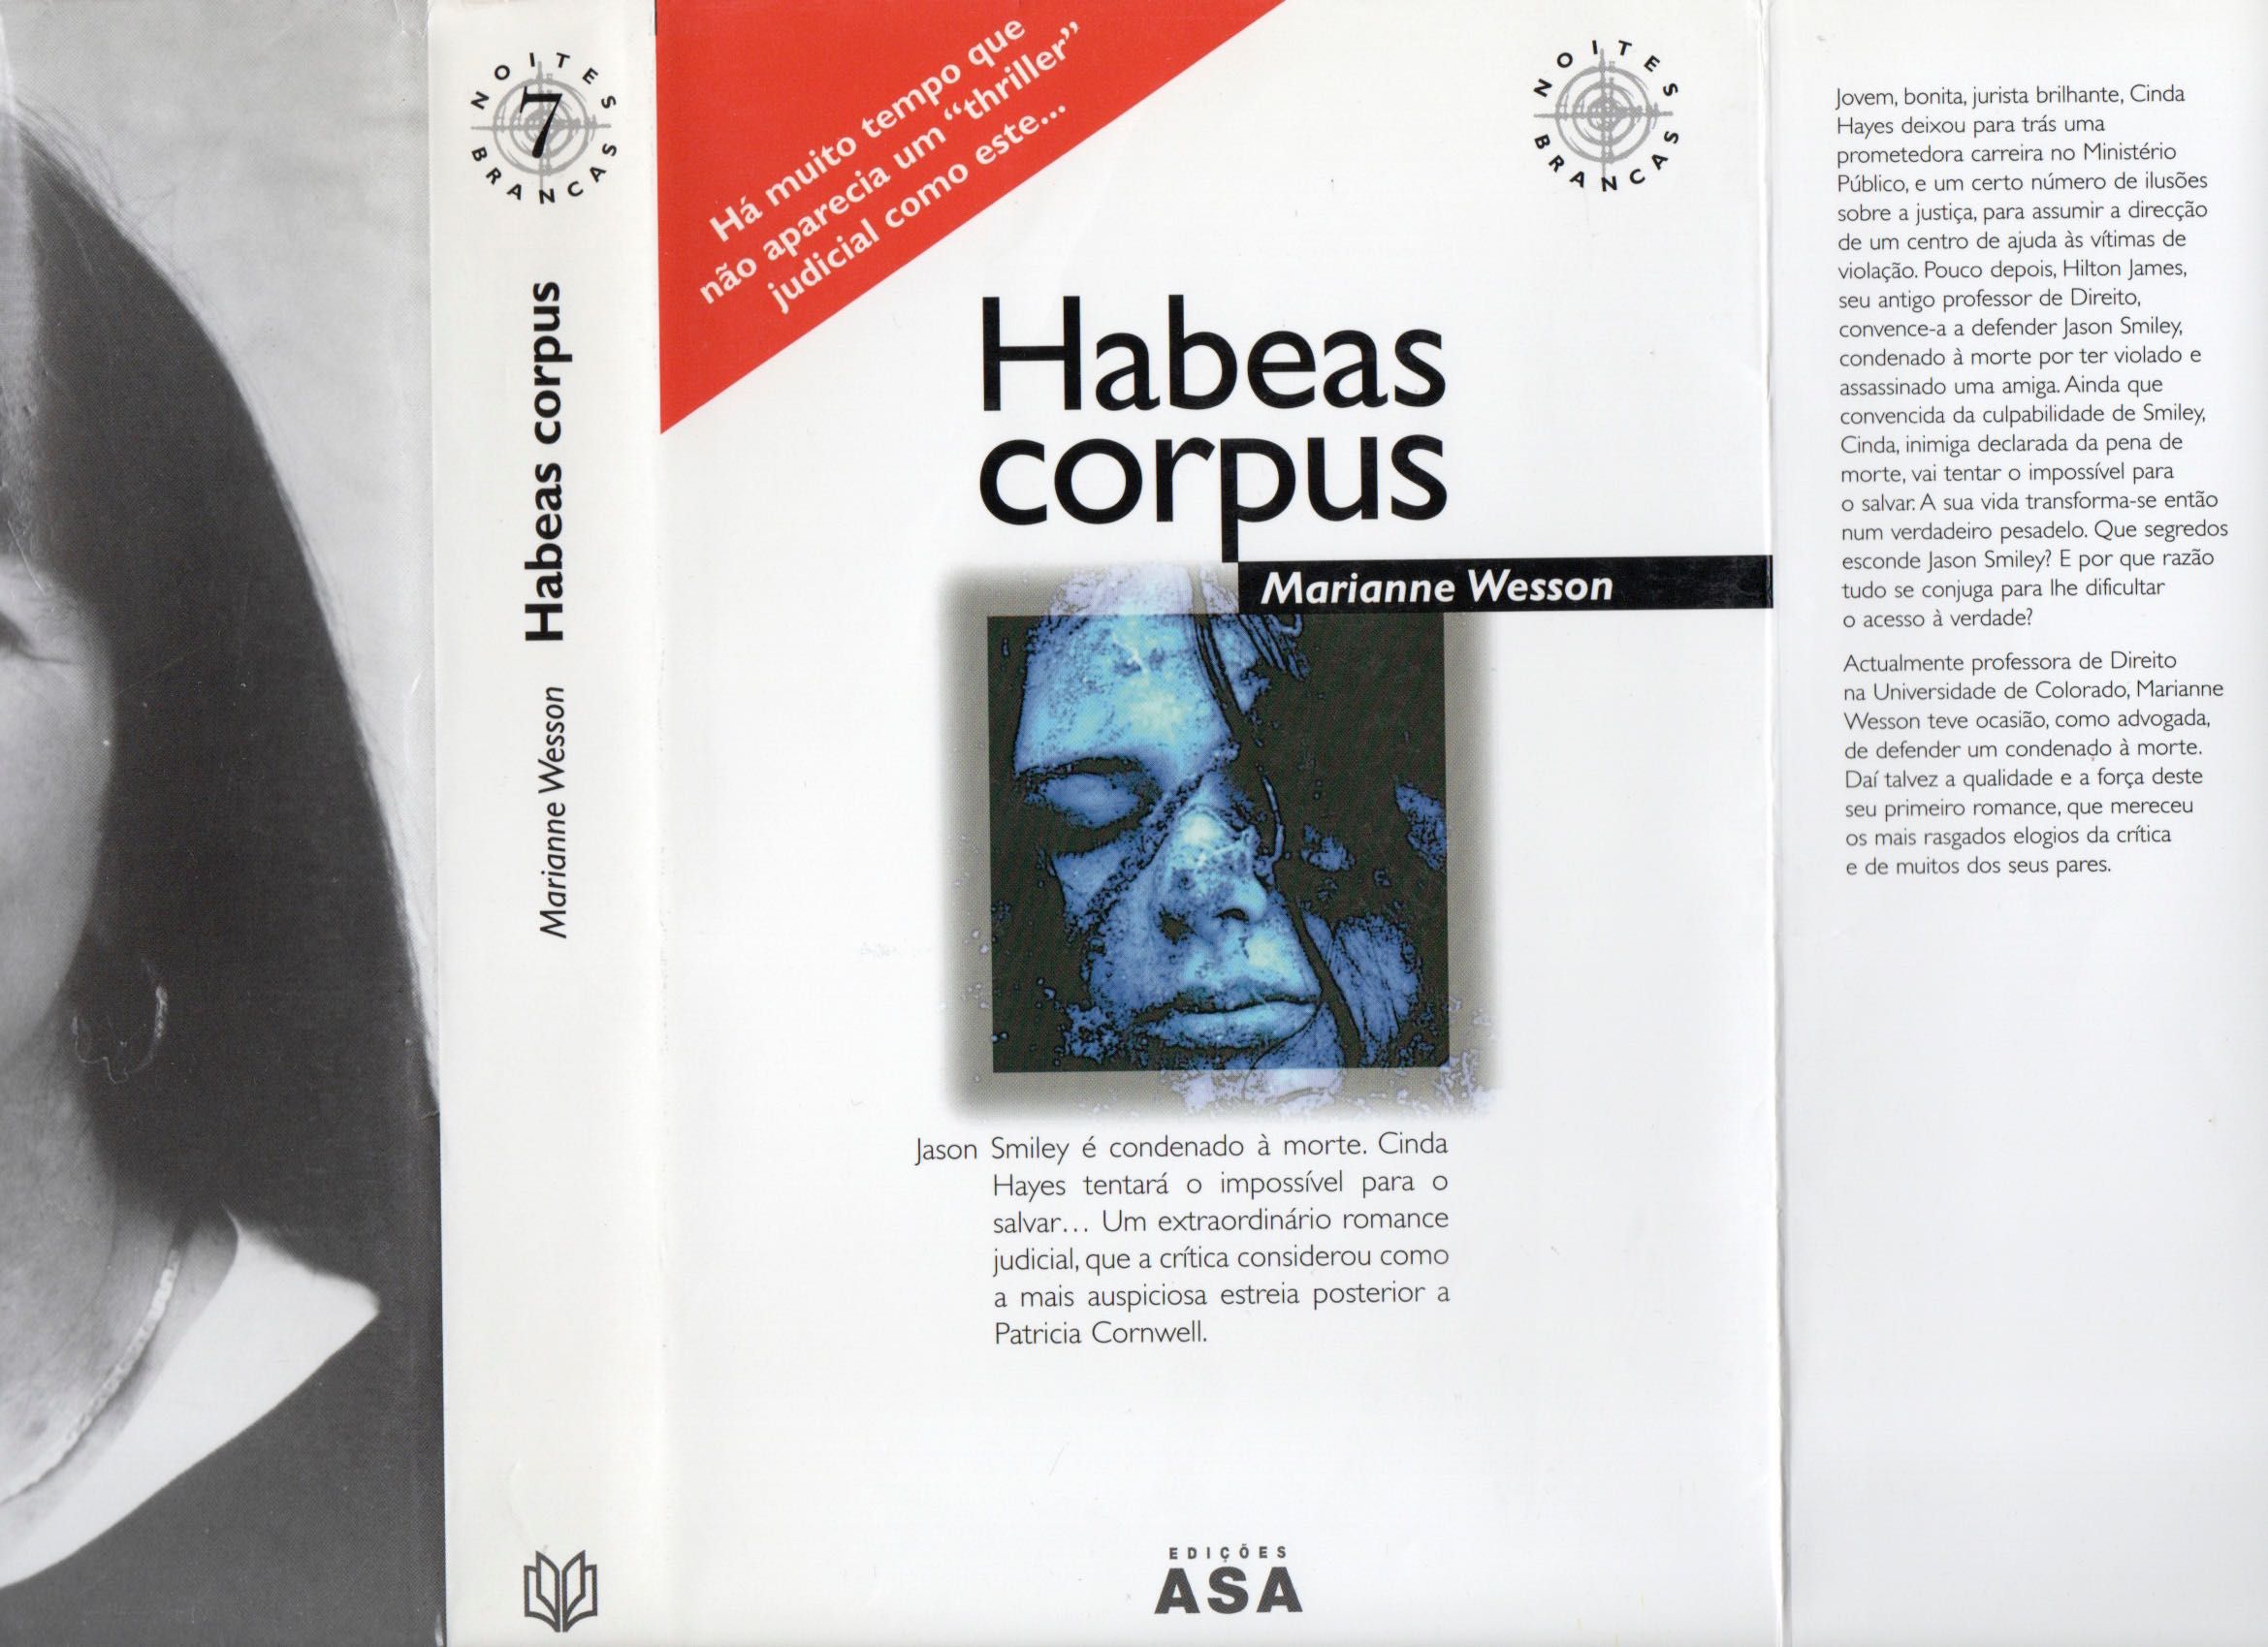 "Habeas corpus" de Marianne Wesson